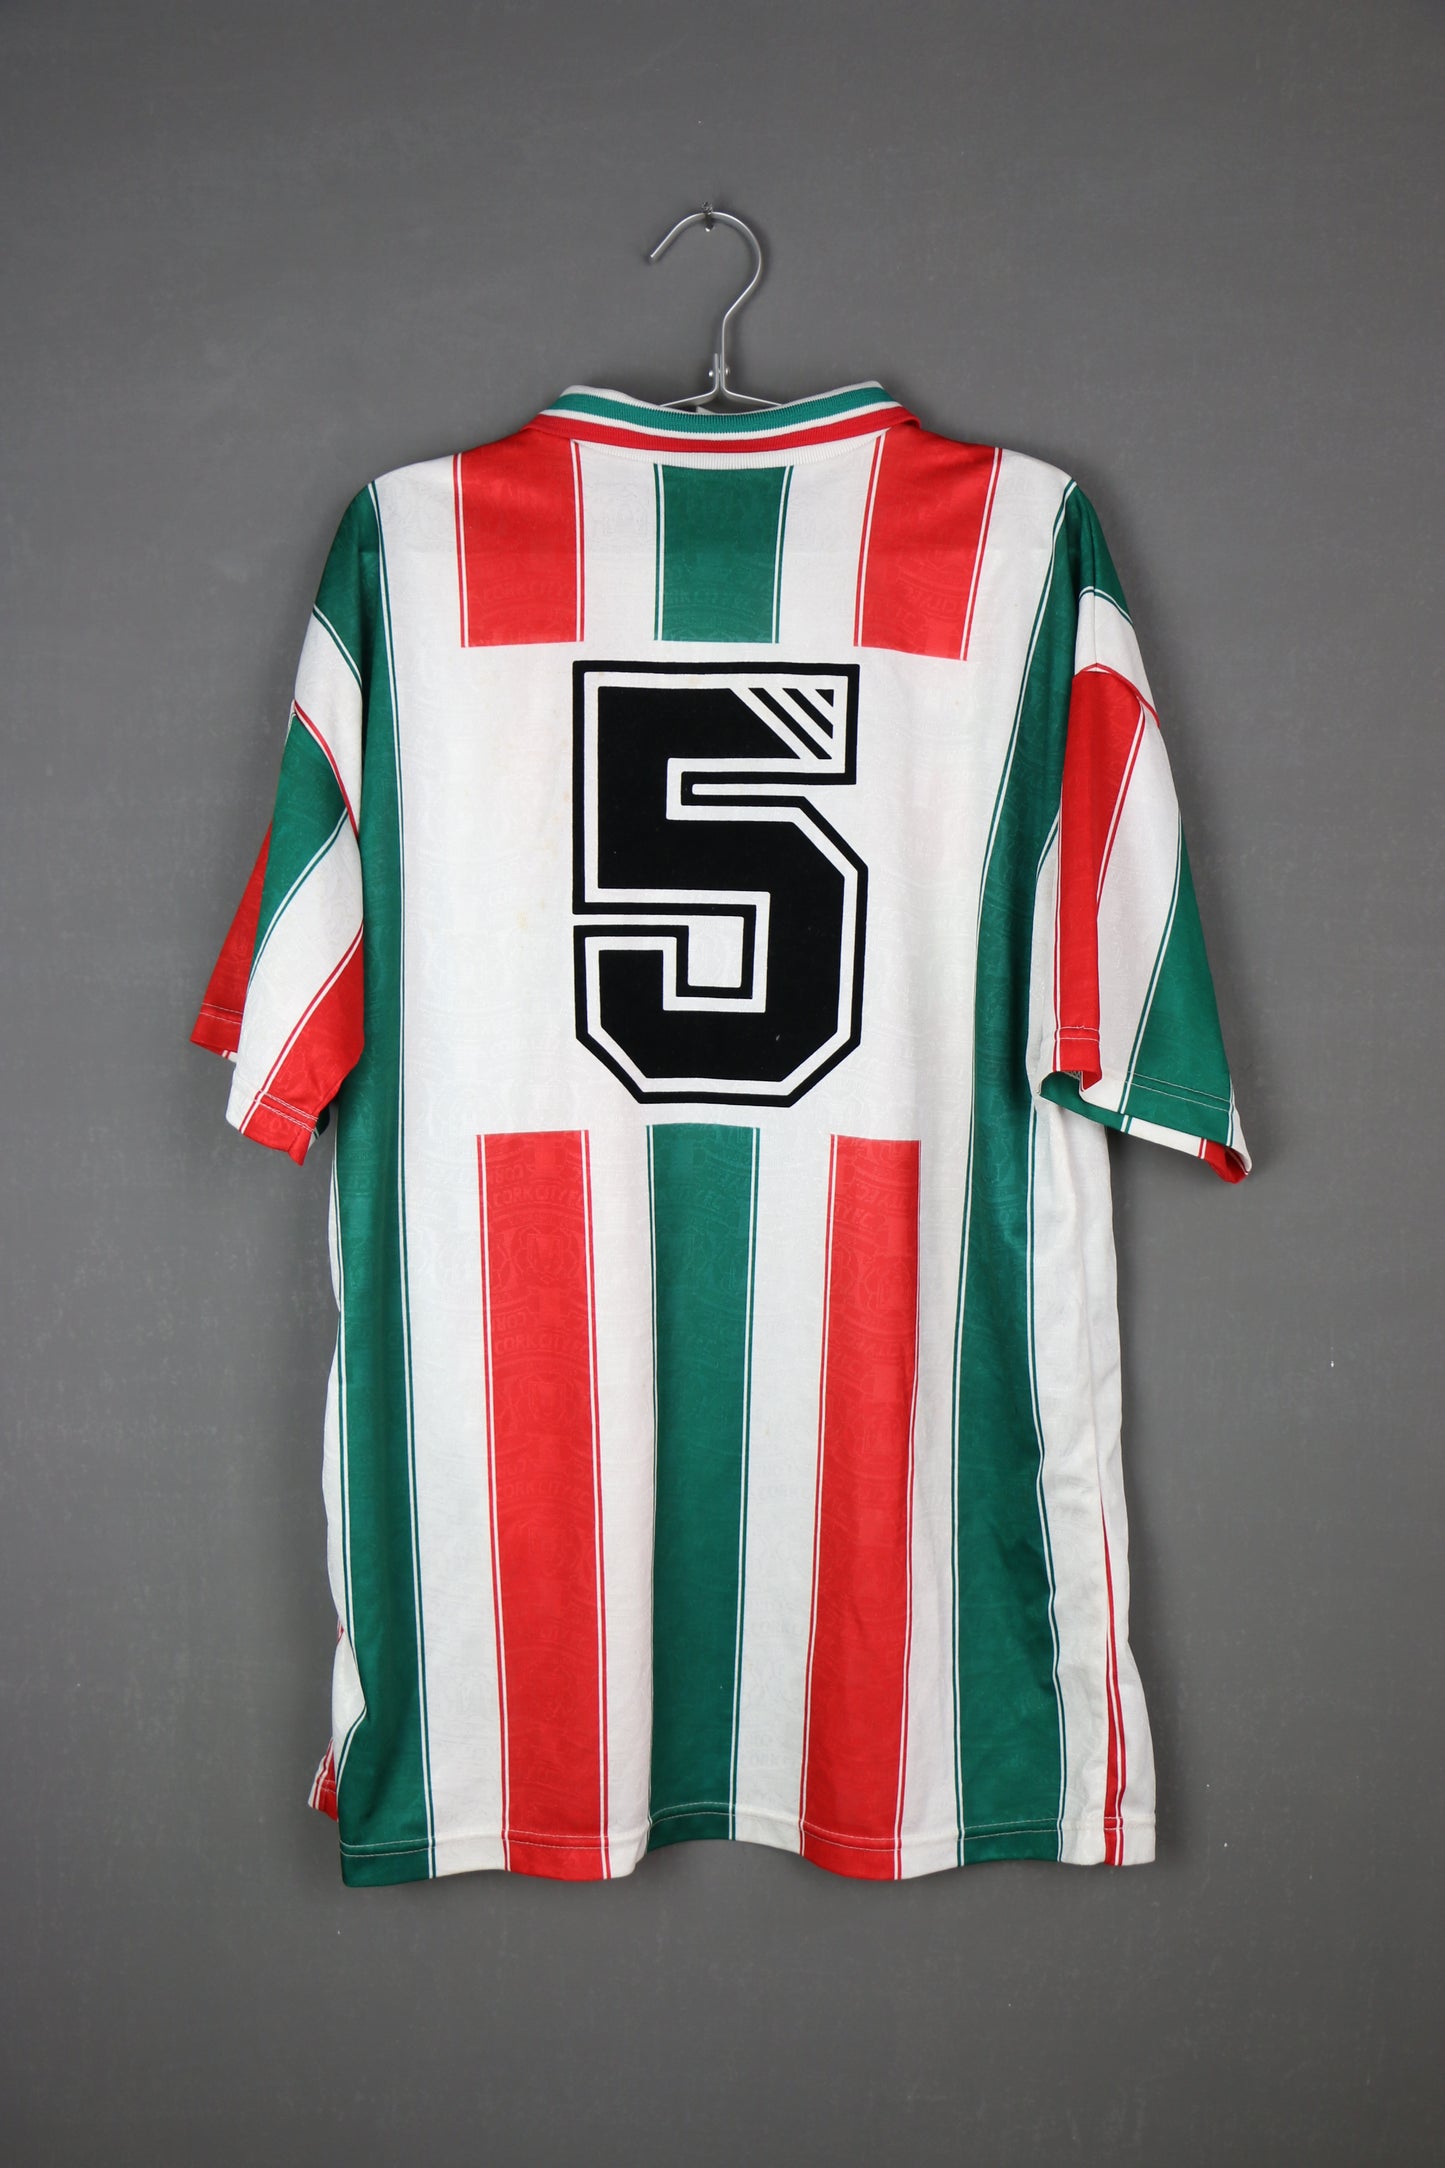 Adidas Football Jersey Cork City FC 'GUINNESS' - vintage clothing clochard92.com